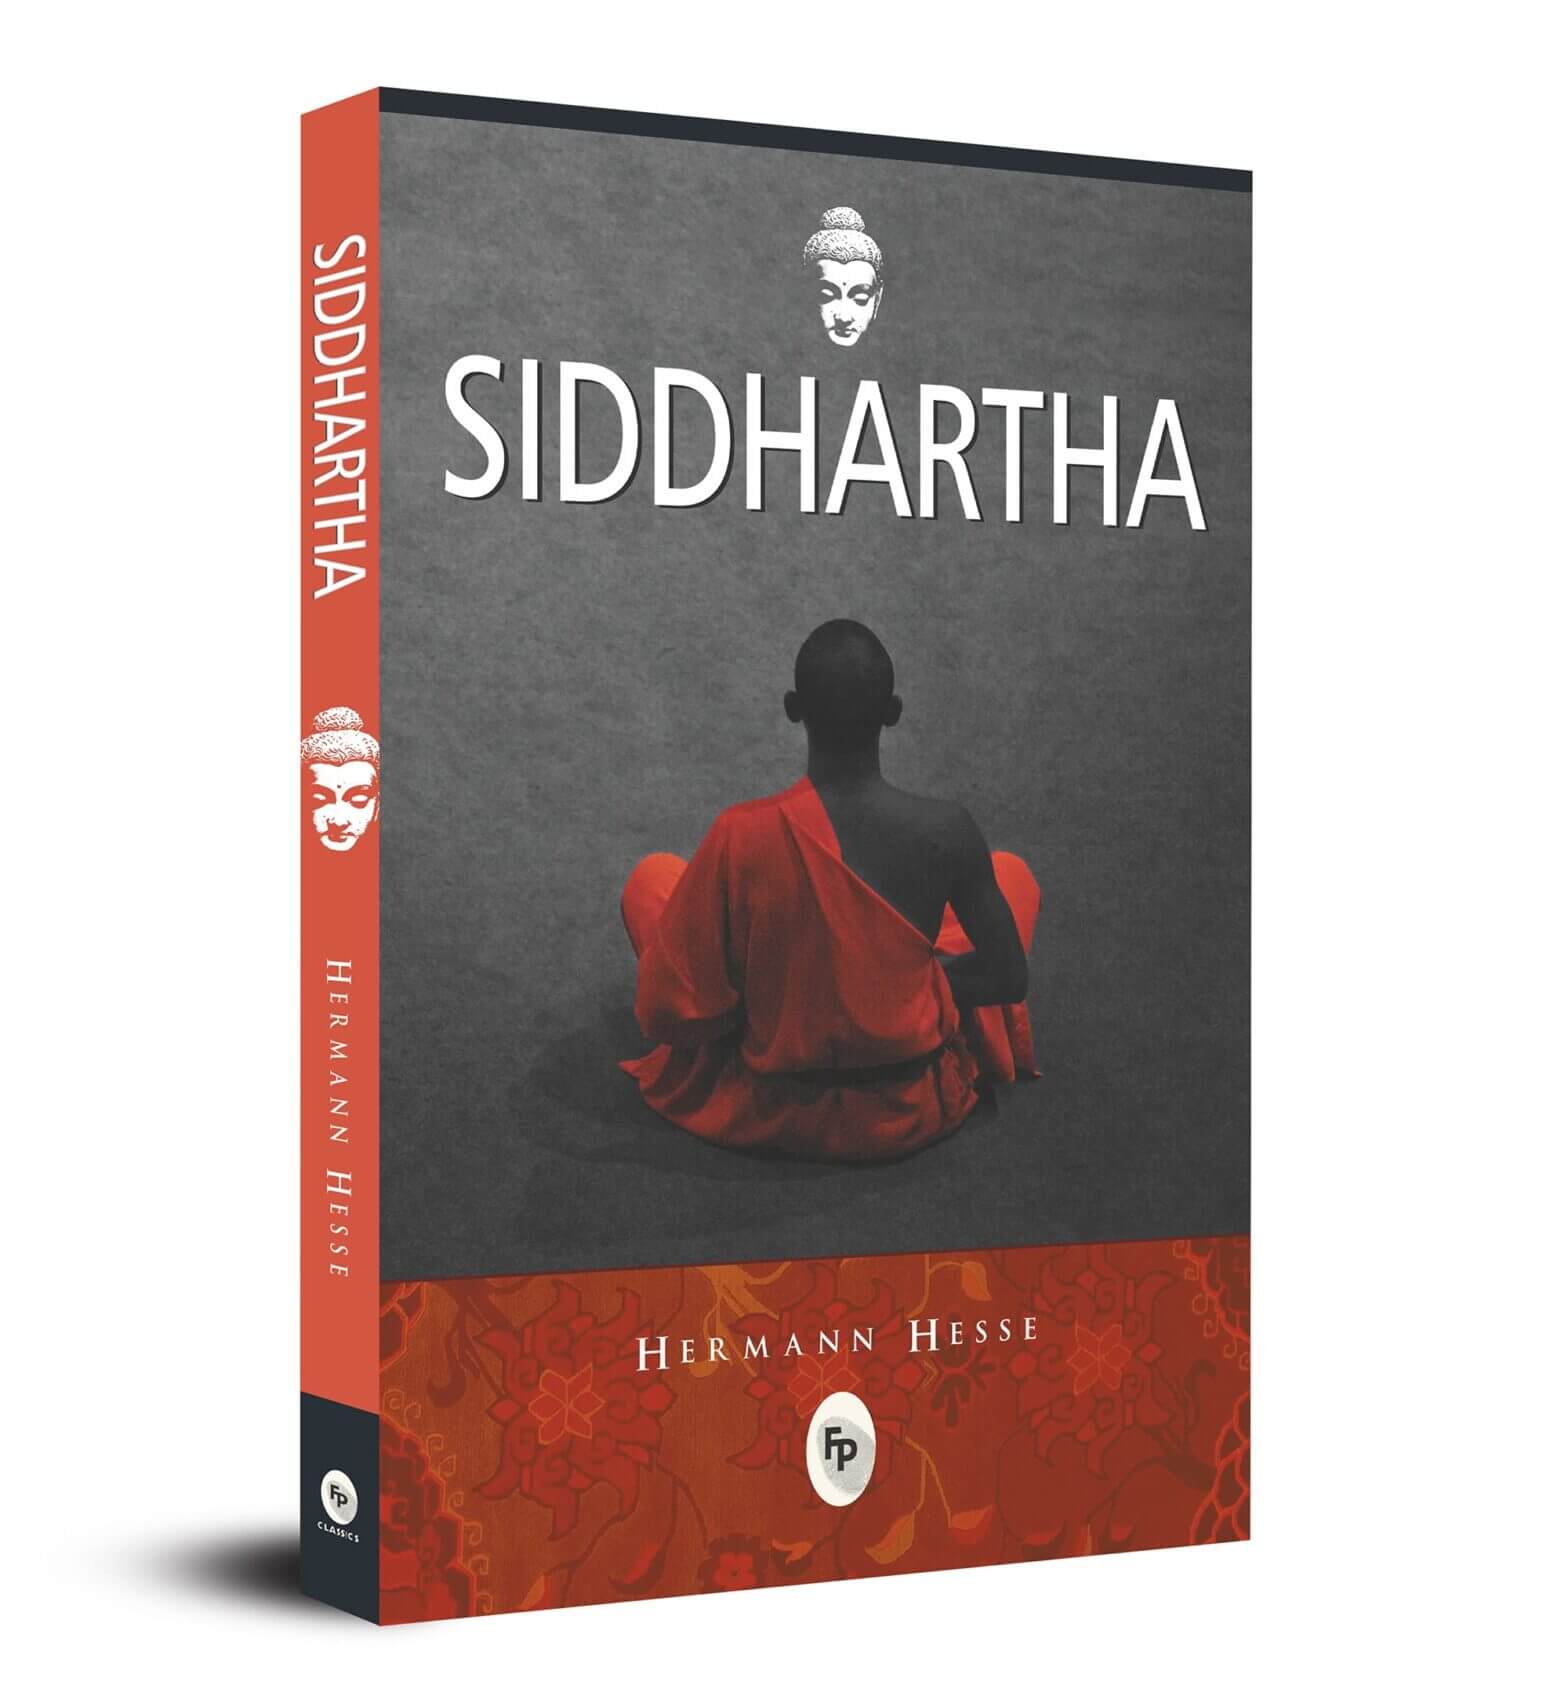 Siddartha by Hermann Hesse | Book Review